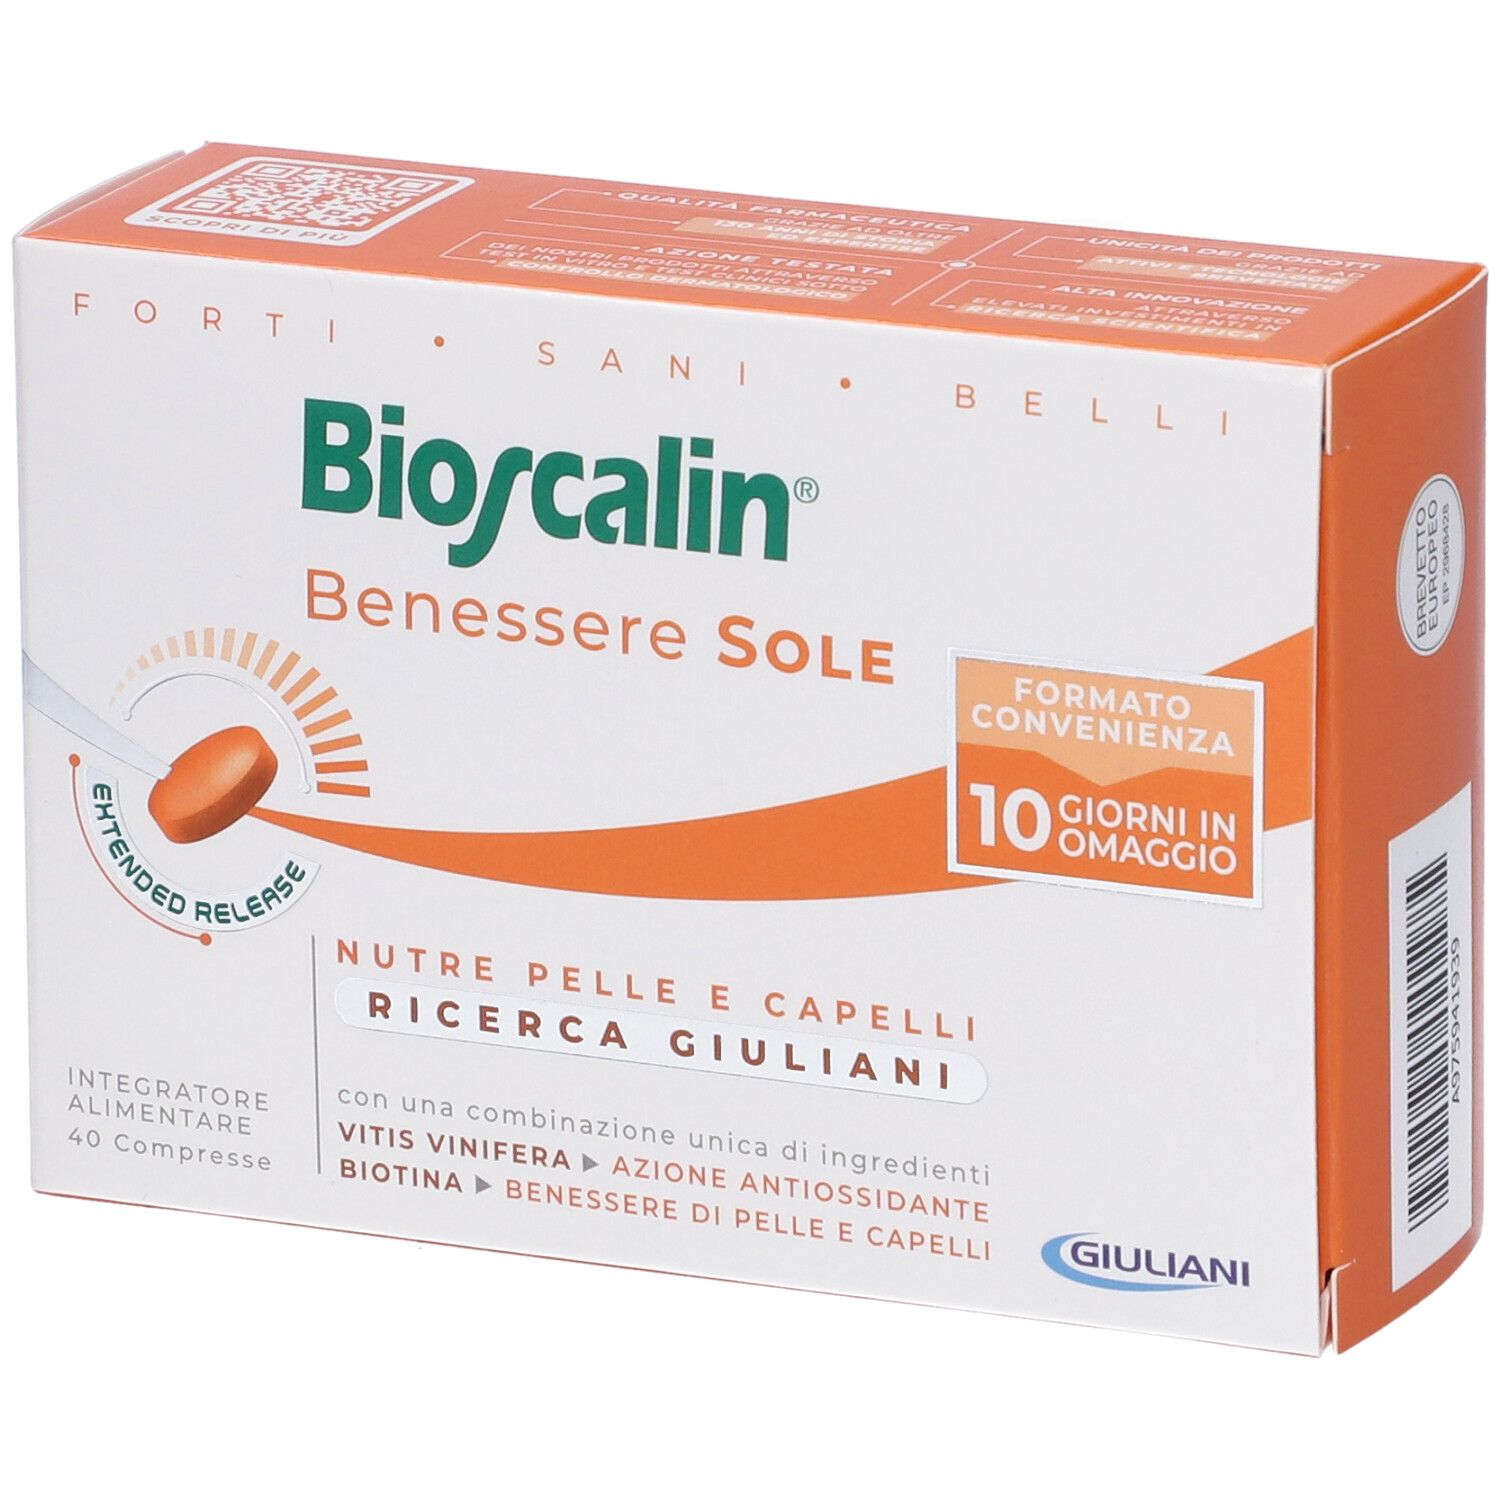 Image of Bioscalin® Benessere Sole